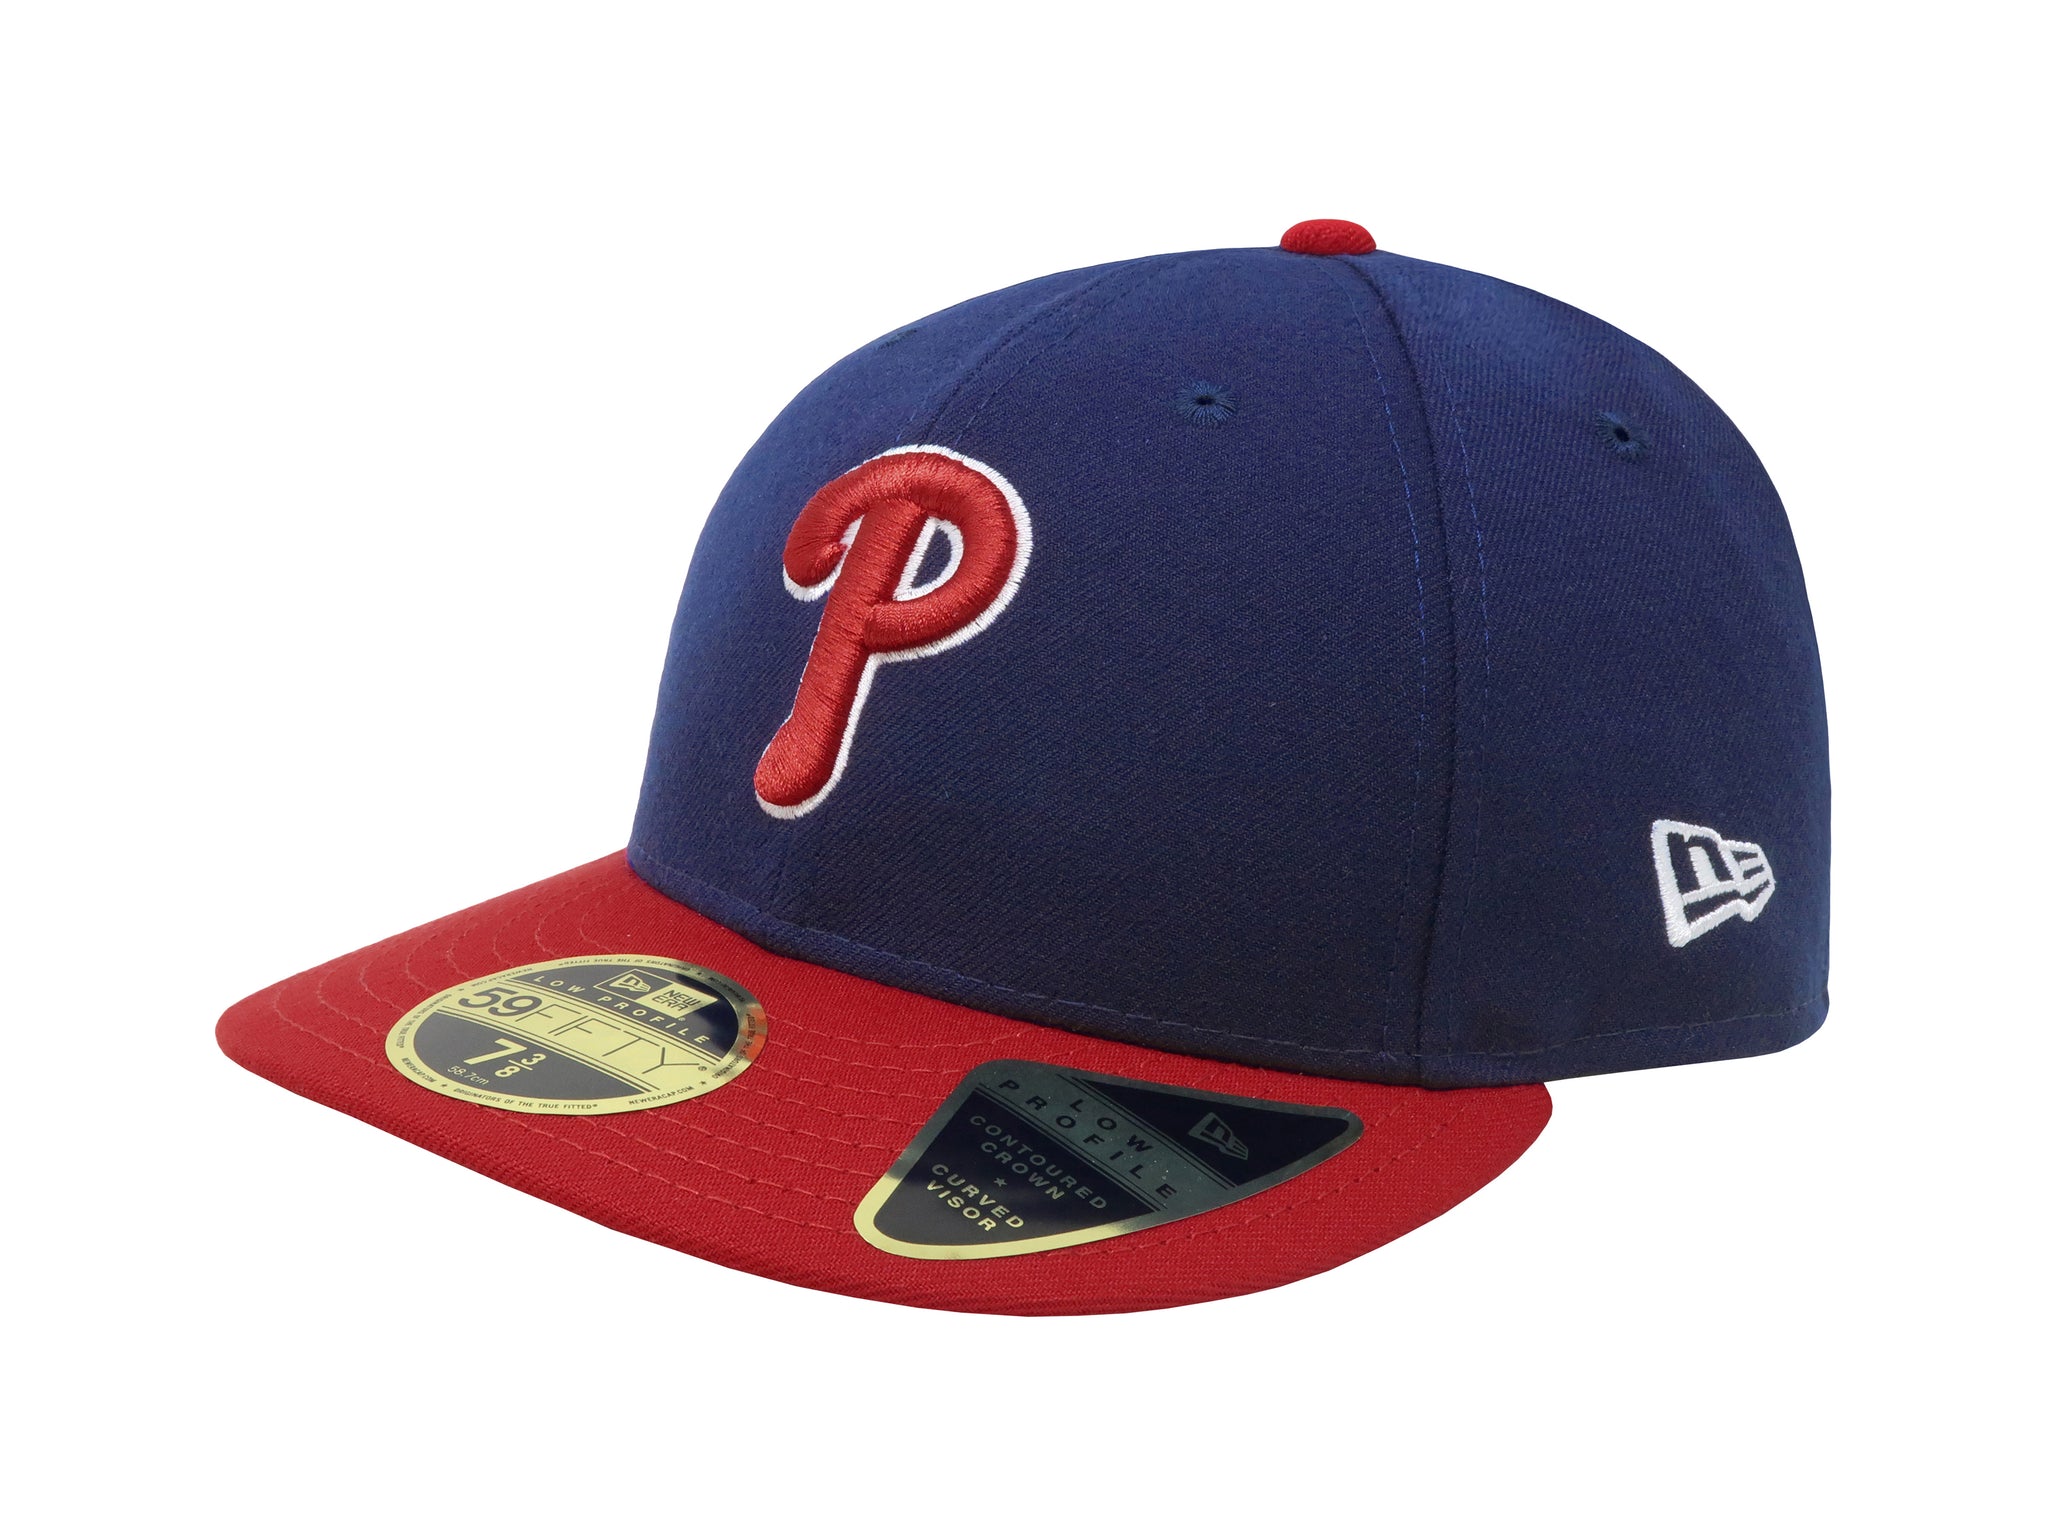 New Era MLB Diamond Era 59FIFTY Baseball Cap (8 1/8)